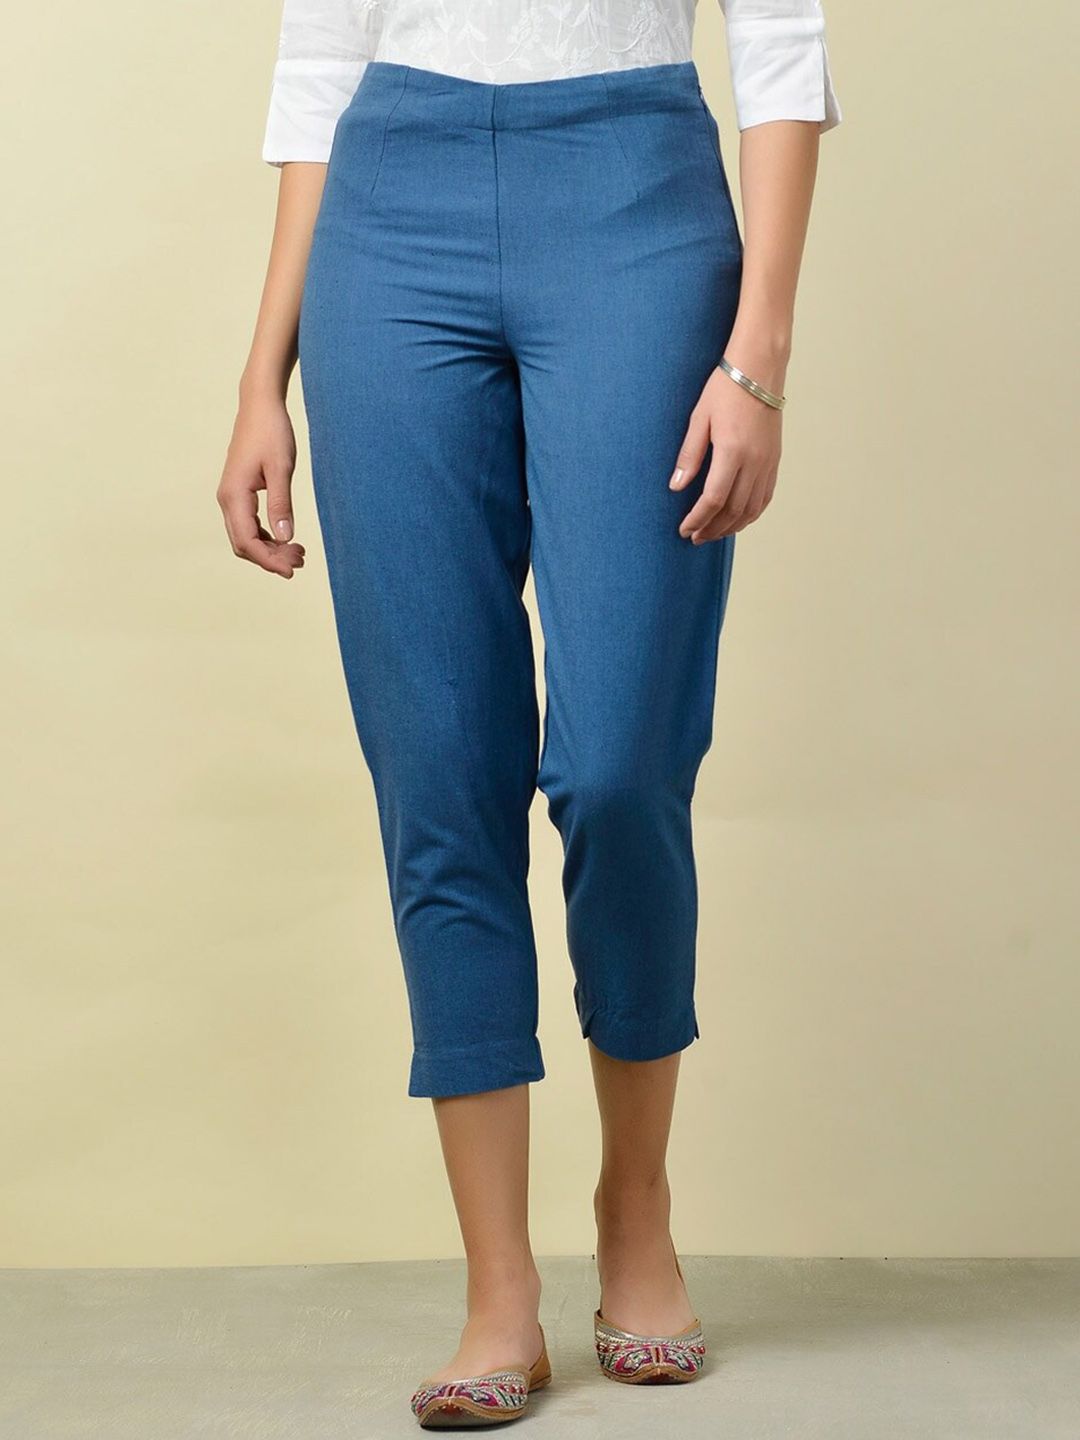 Fabindia Women Blue Slim Fit Trousers Price in India